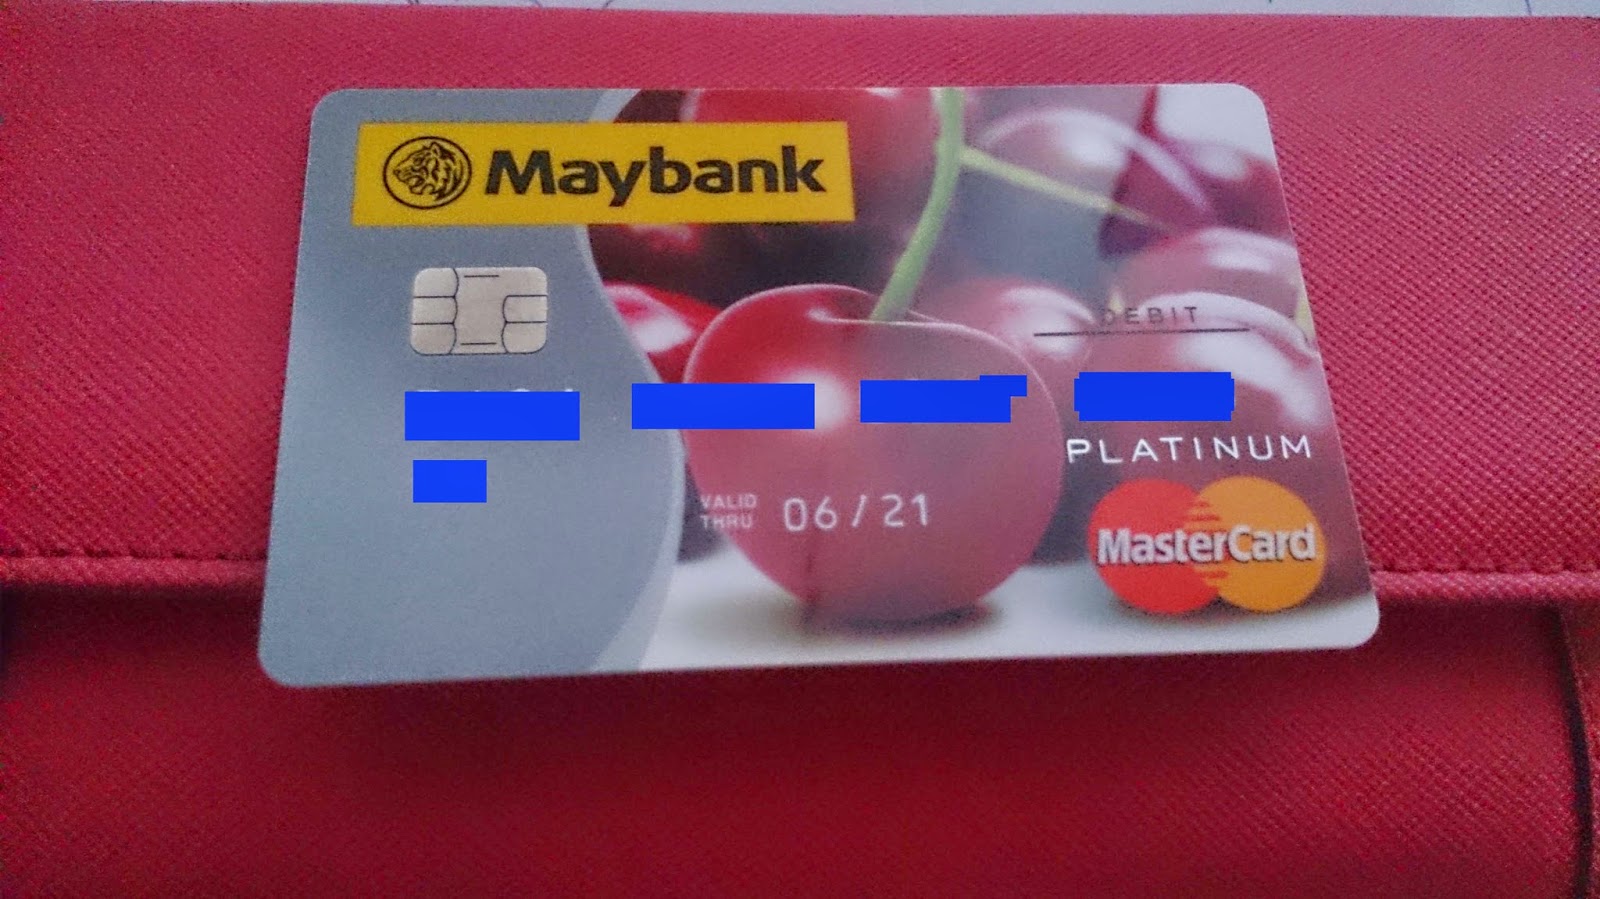 KLSE TALK - 歪歪理财记事本: Maybank MasterCard Platinum Debit ...